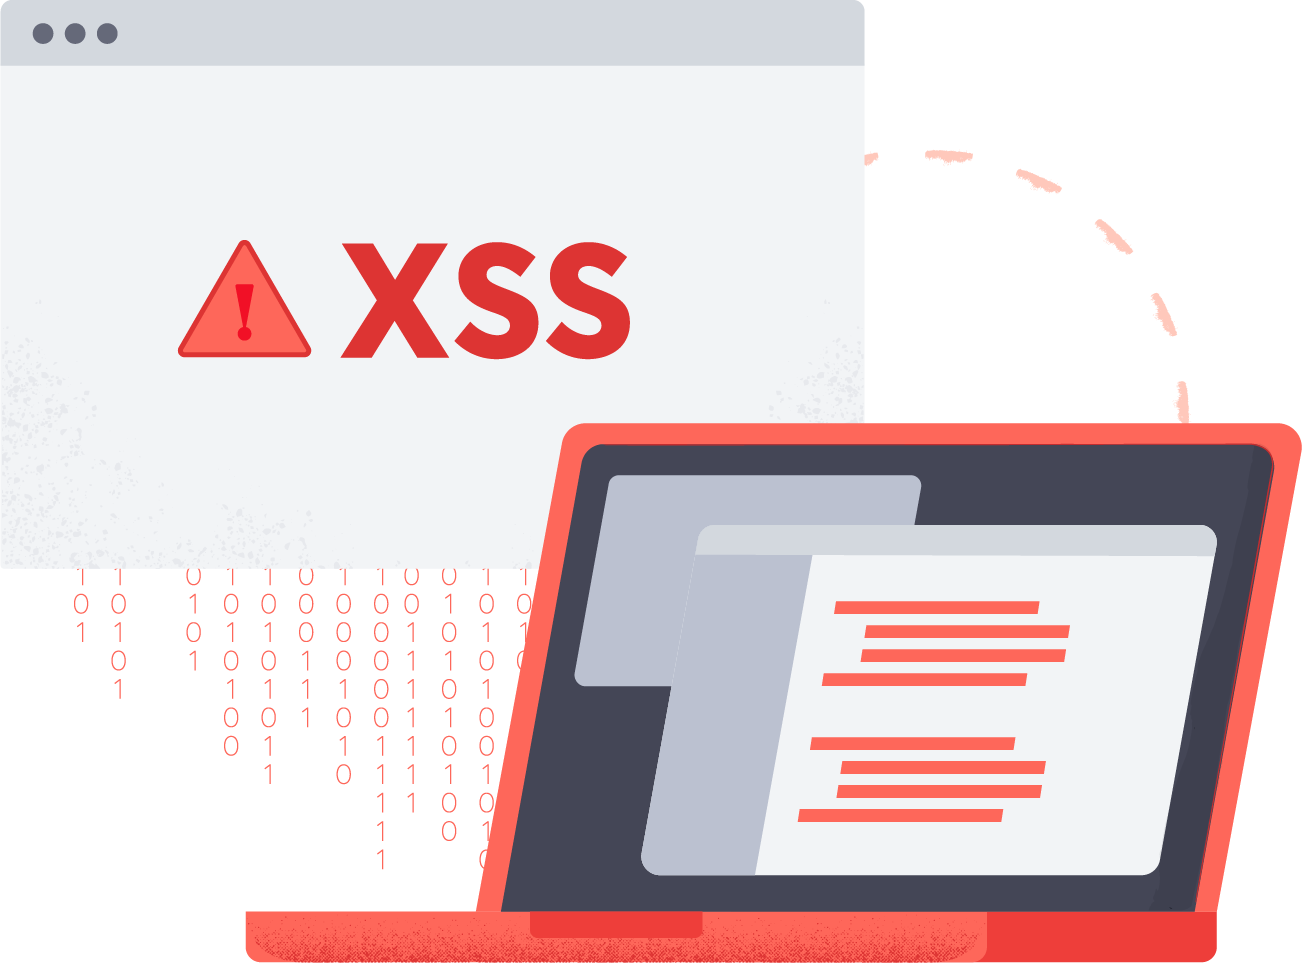 Cross Site Scripting Scanning - XSSS